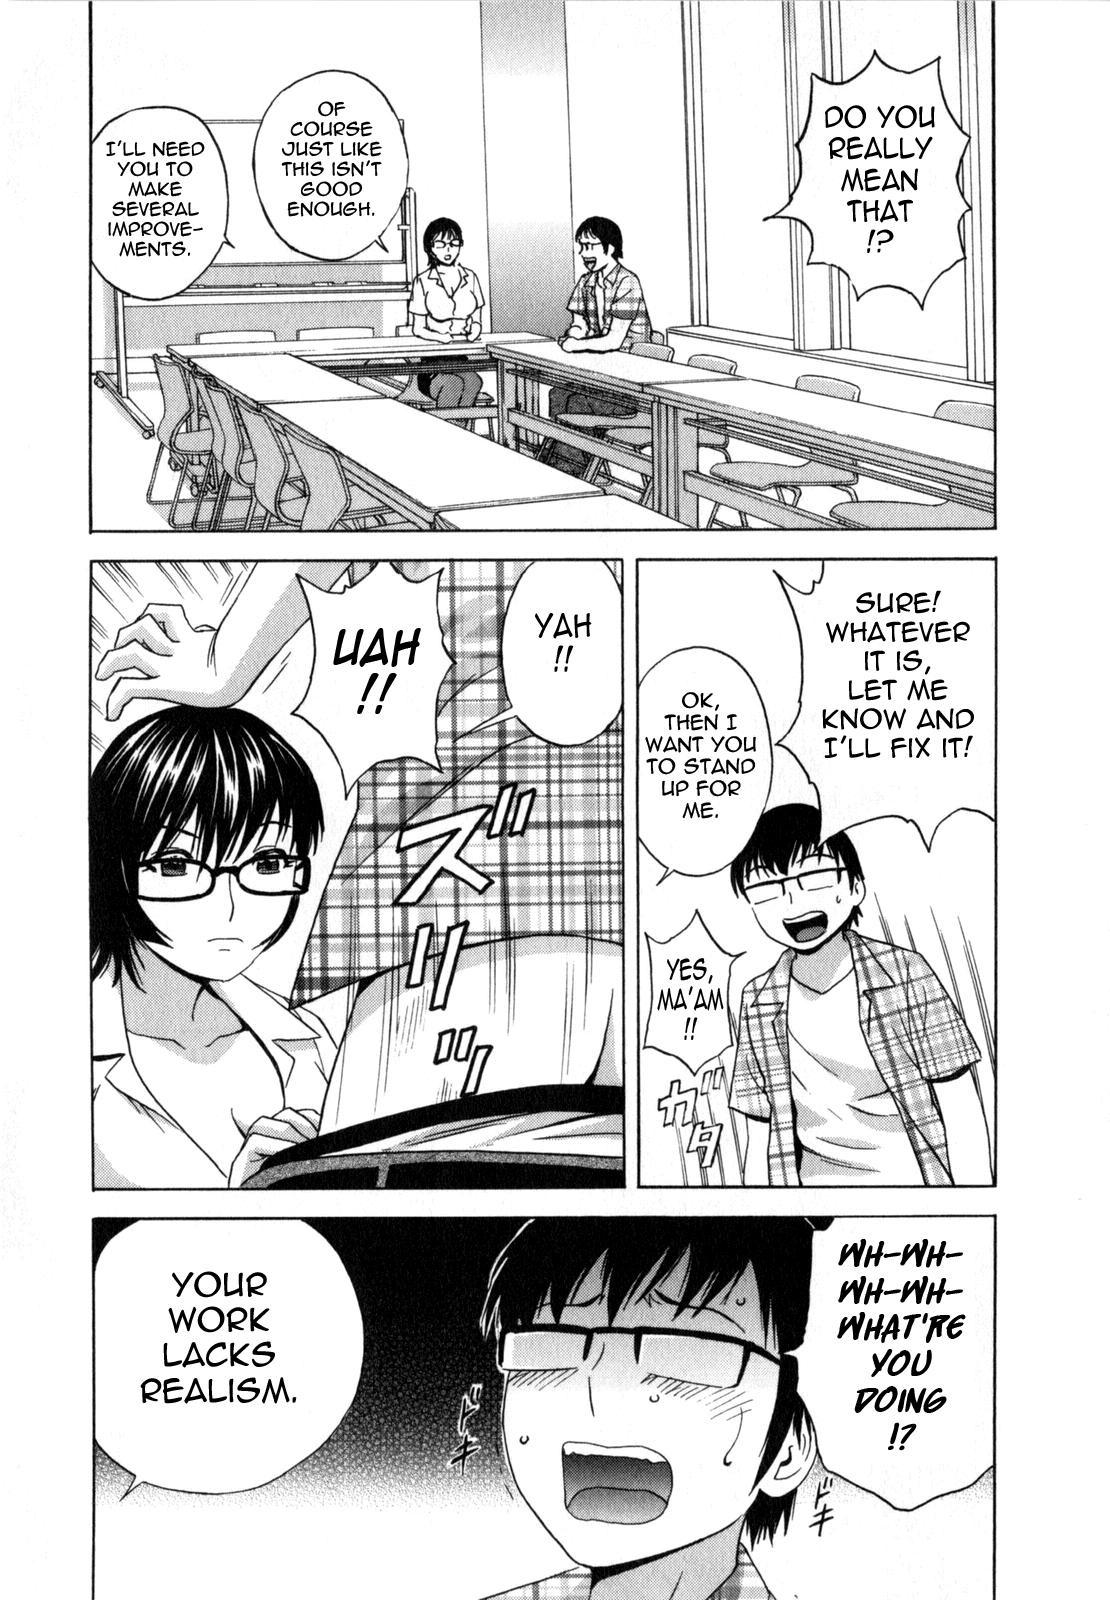 Life with Married Women Just Like a Manga 1 105